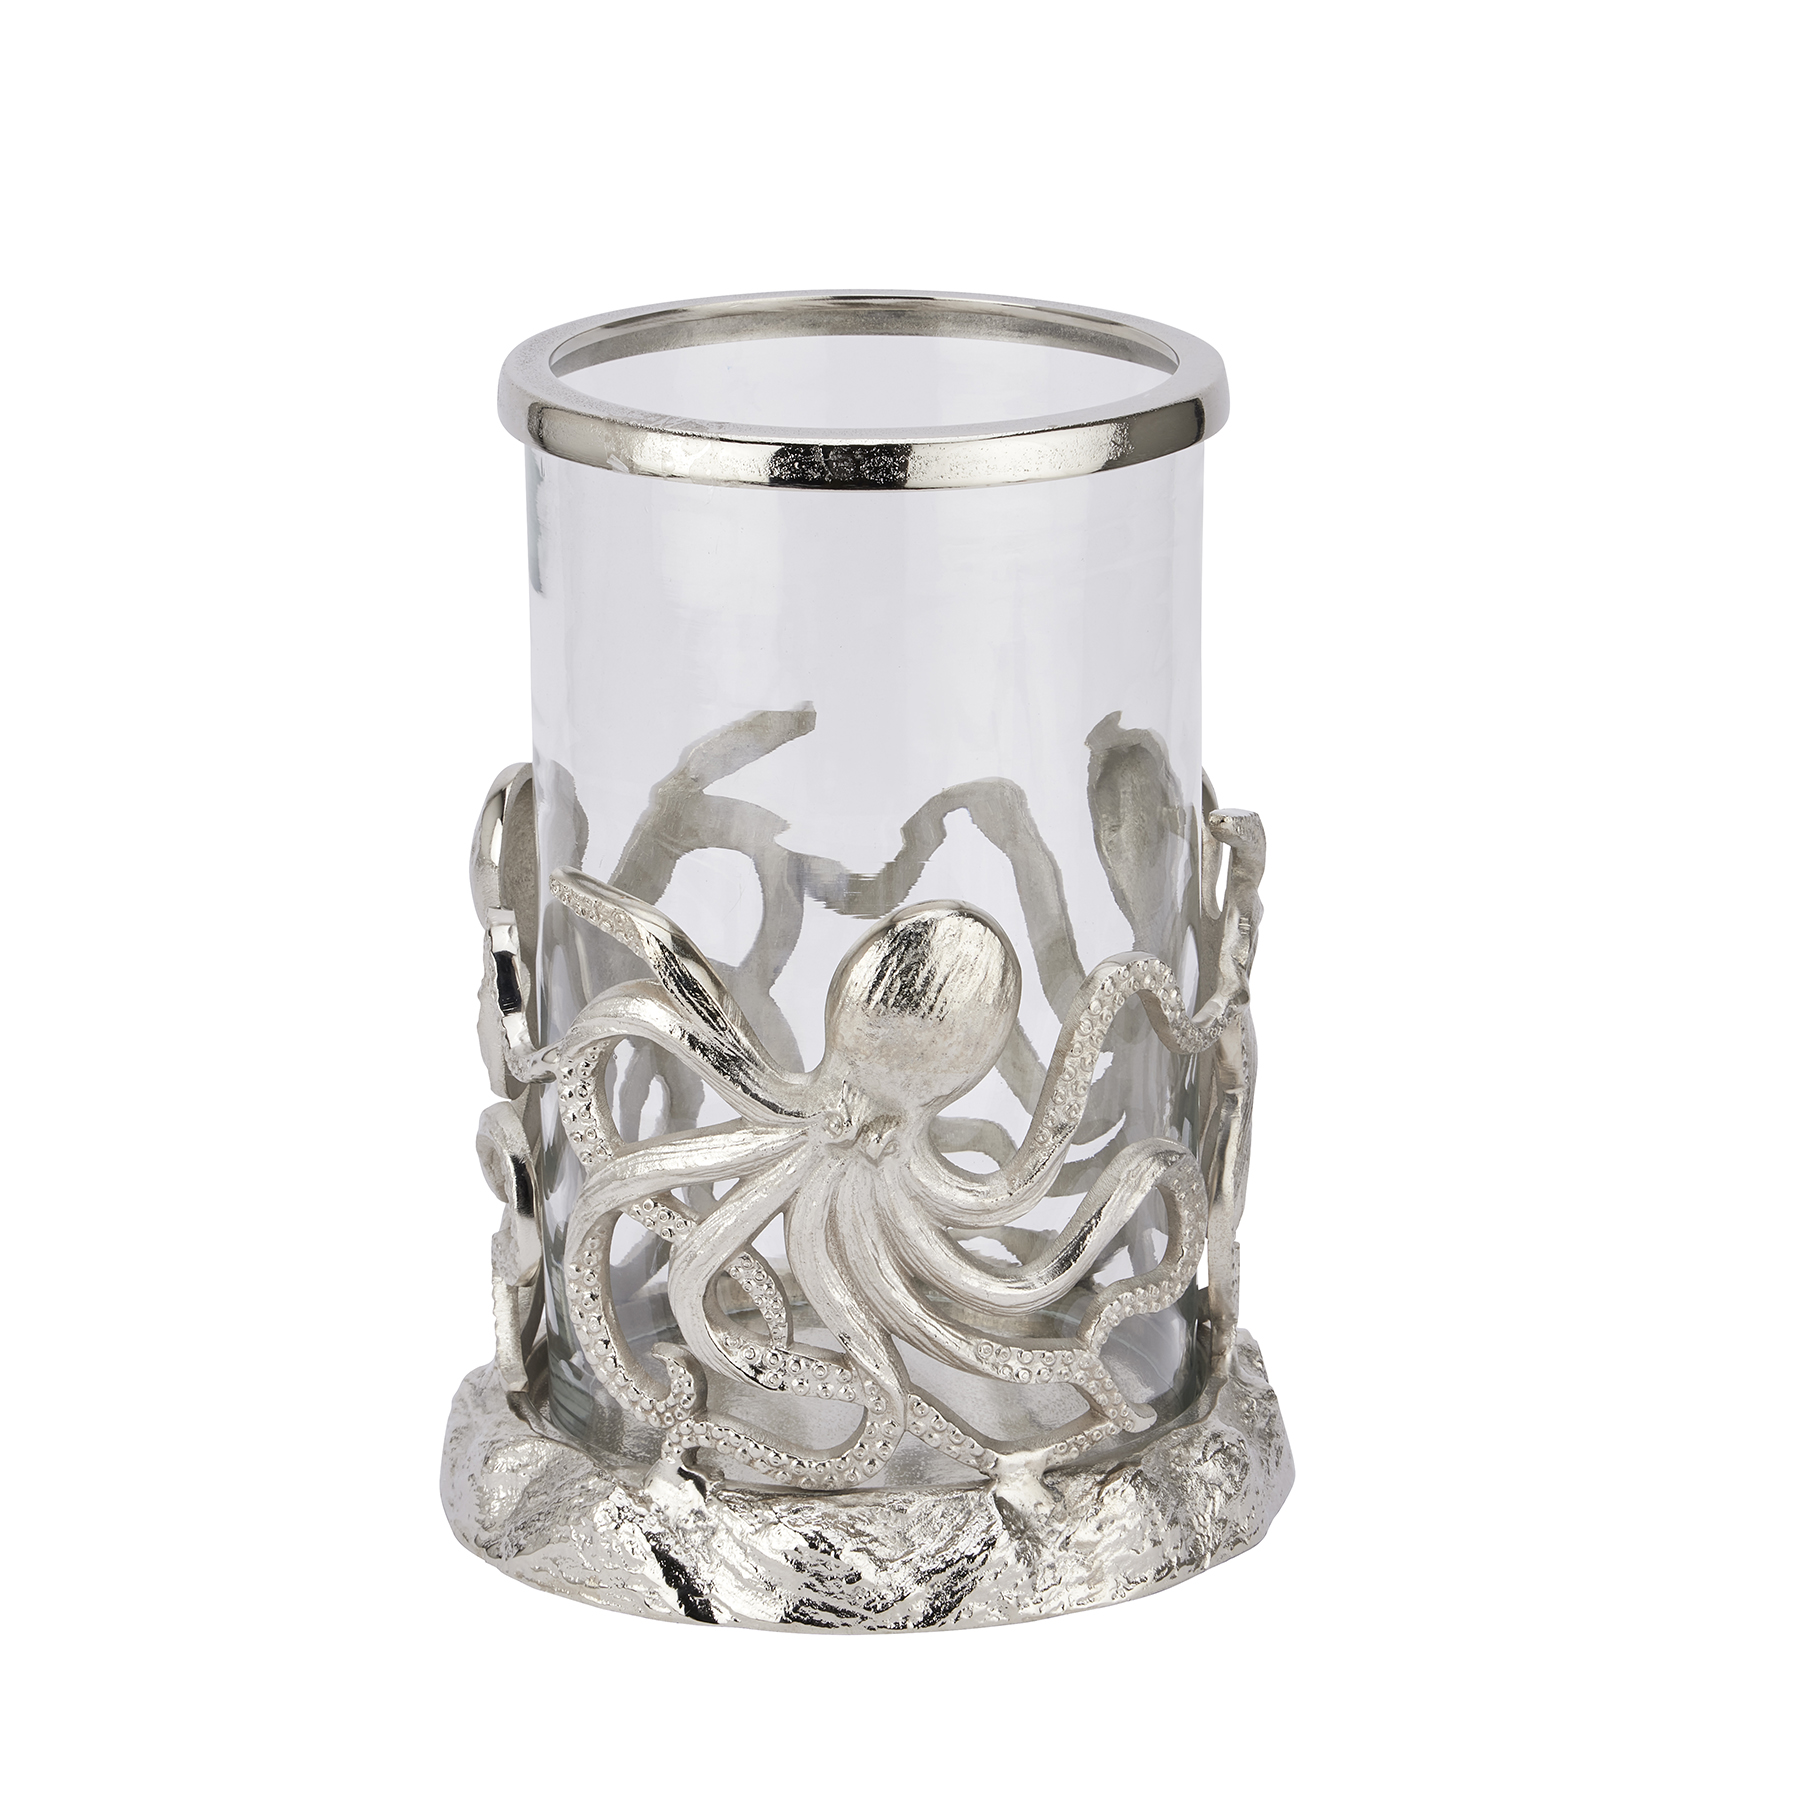 Silver Octopus Candle Hurricane Lantern - Image 1